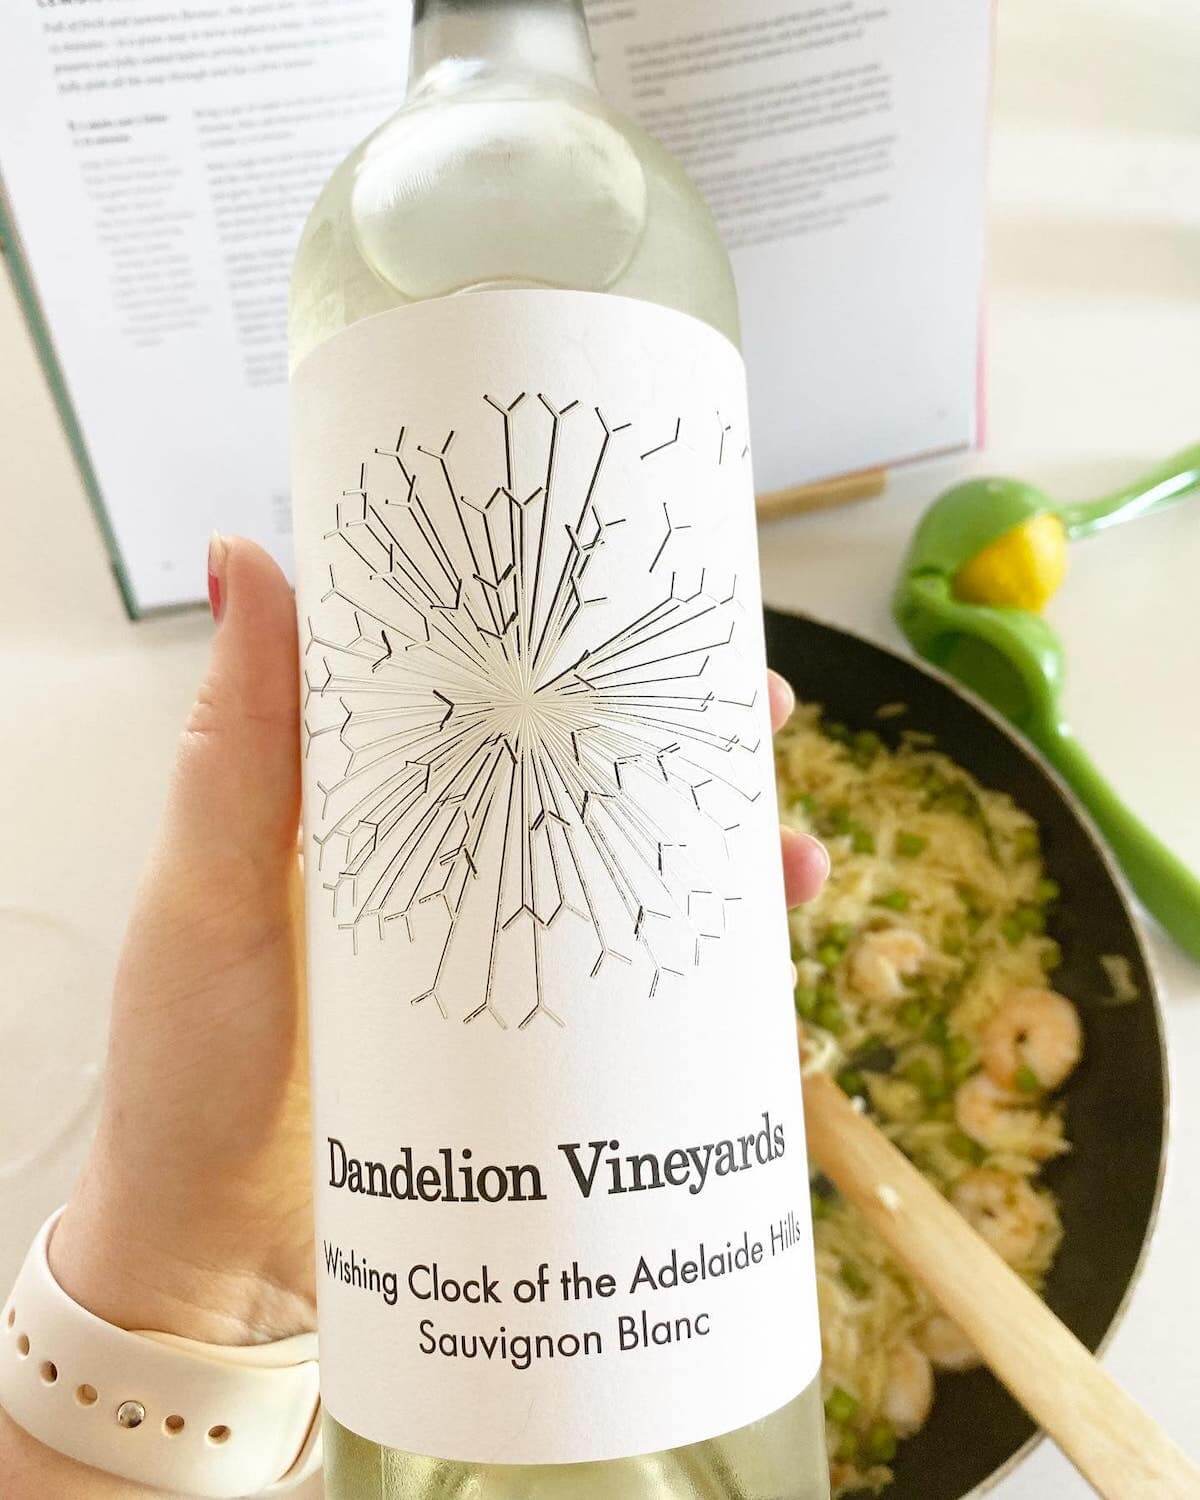 Dandelion Vineyards Wishing Clock of the Adelaide Hills Sauvignon Blanc 2020